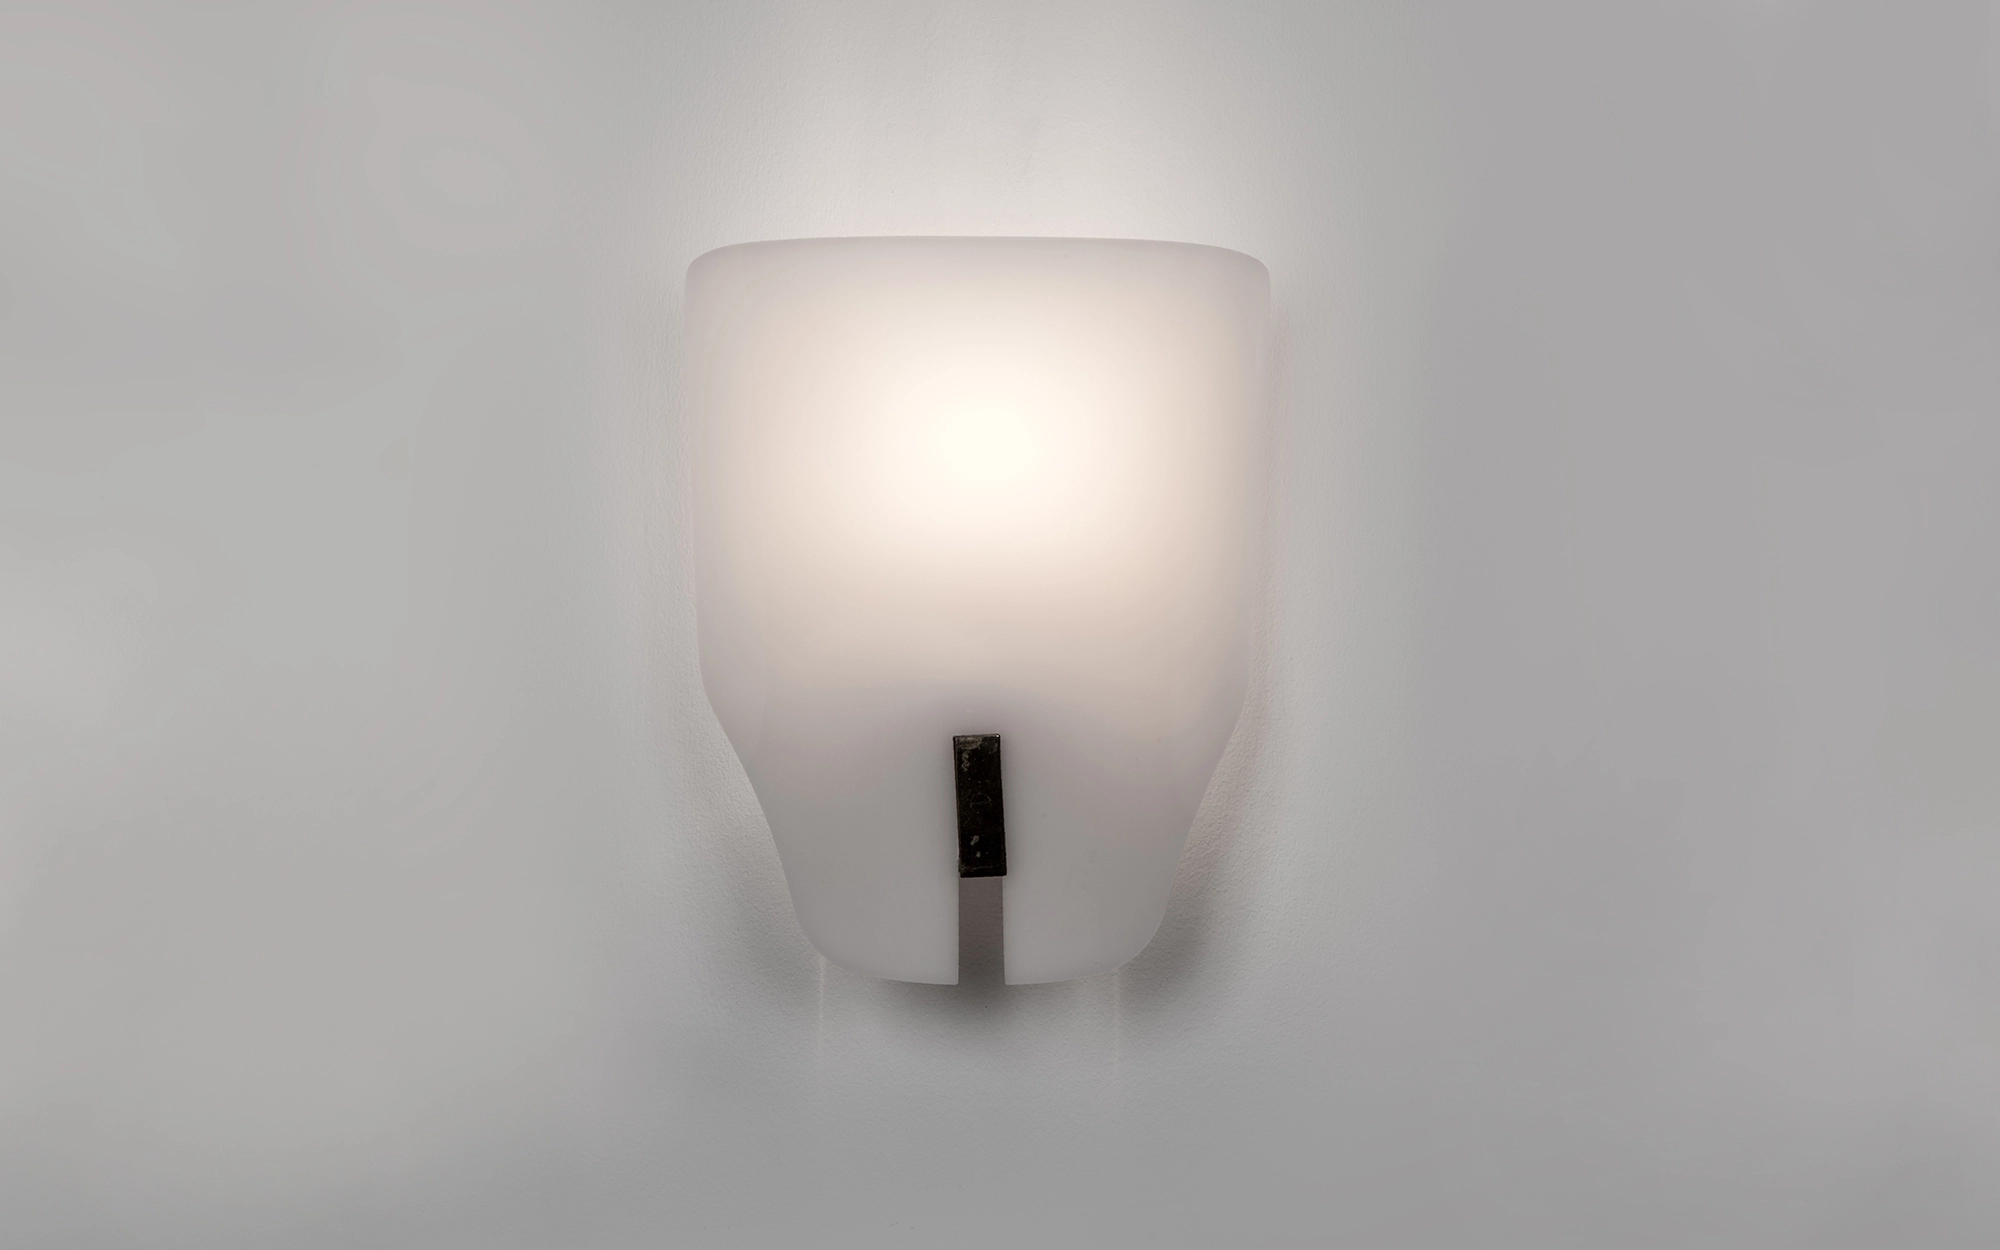 167px - Gino Sarfatti - wall-light - Galerie kreo